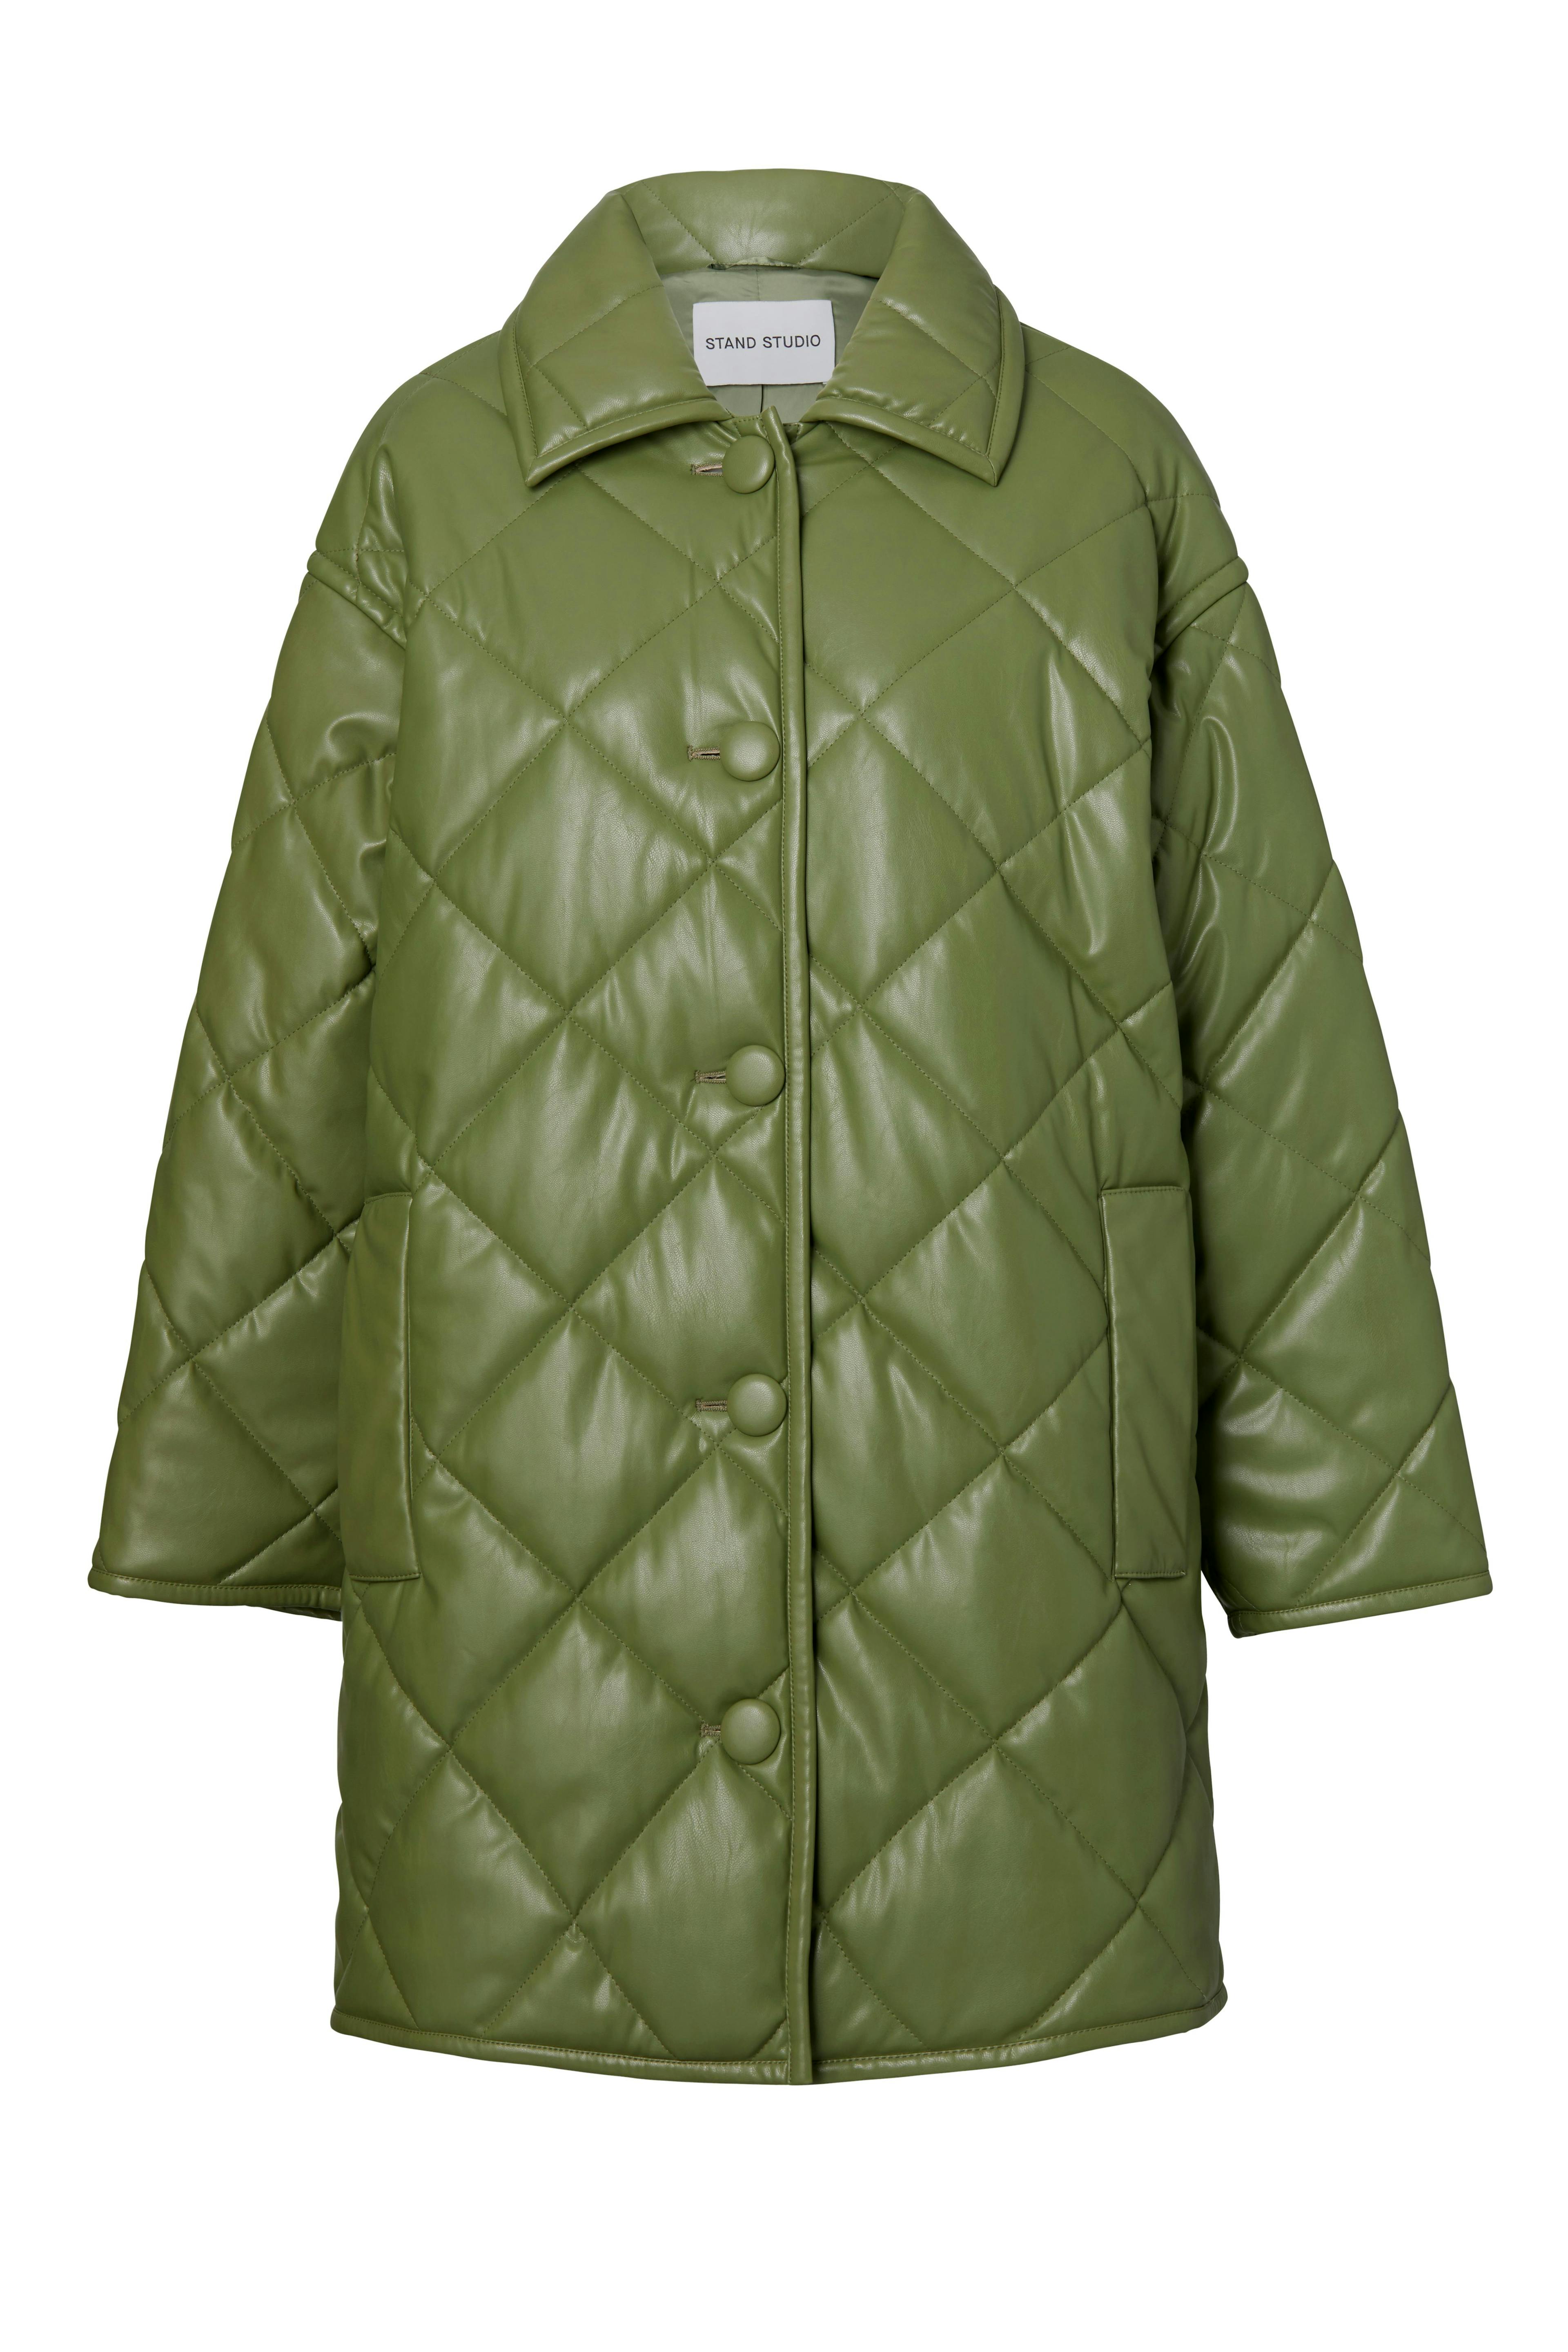 clothing apparel jacket coat